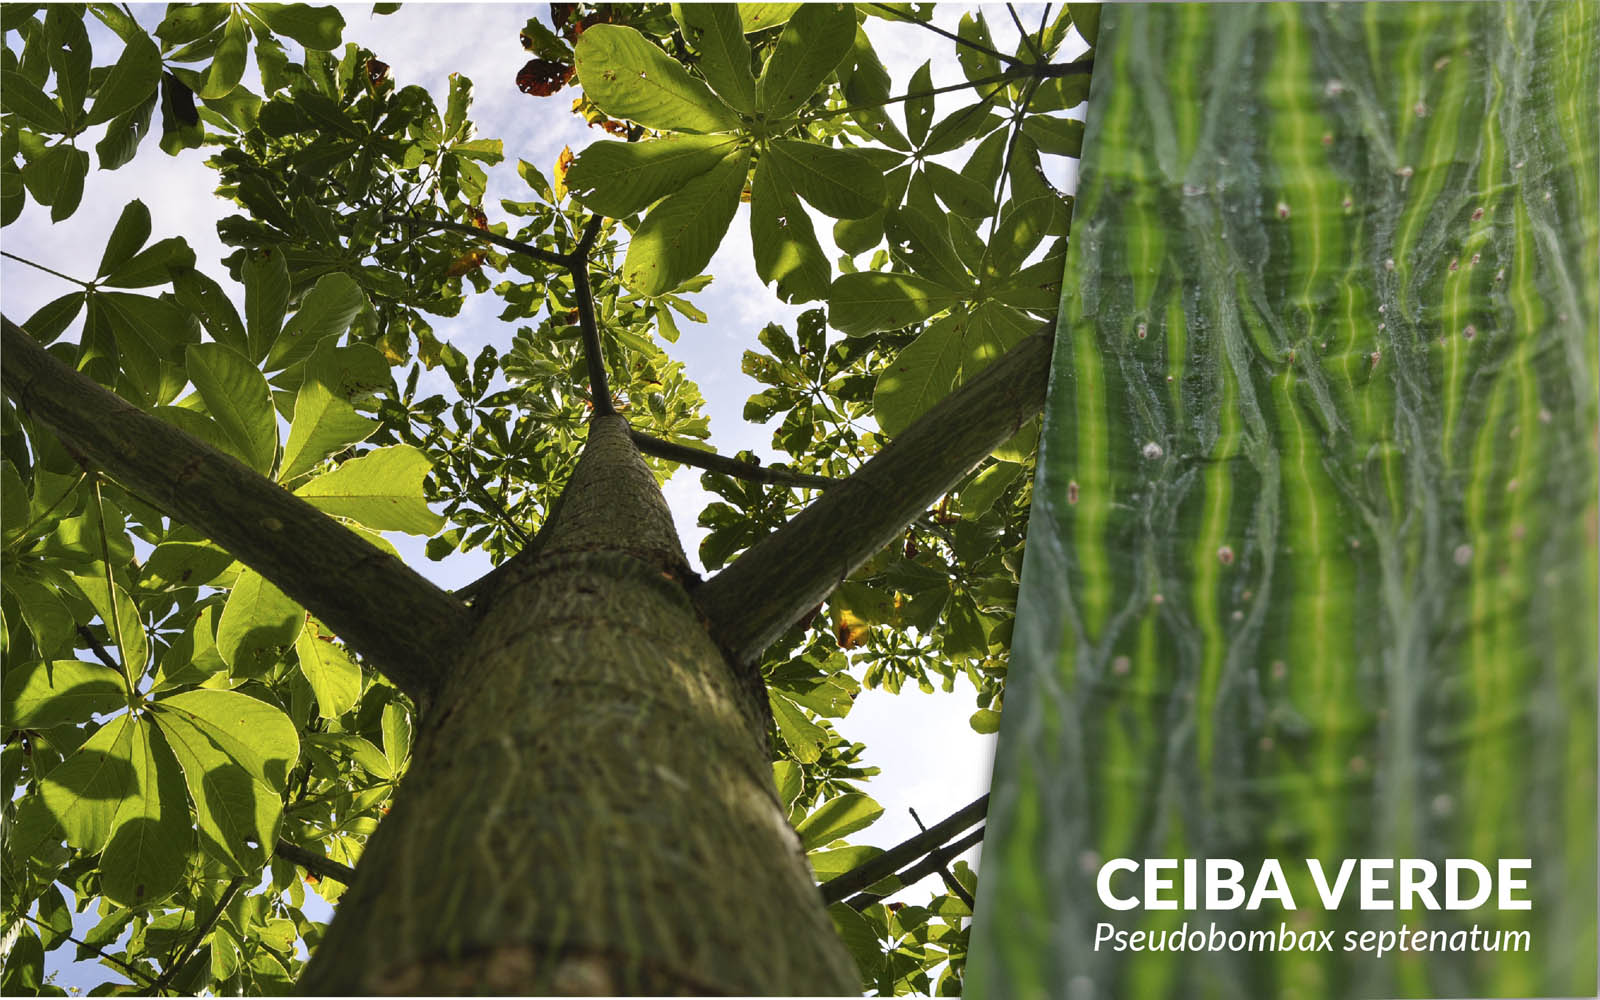 Ceiba verde